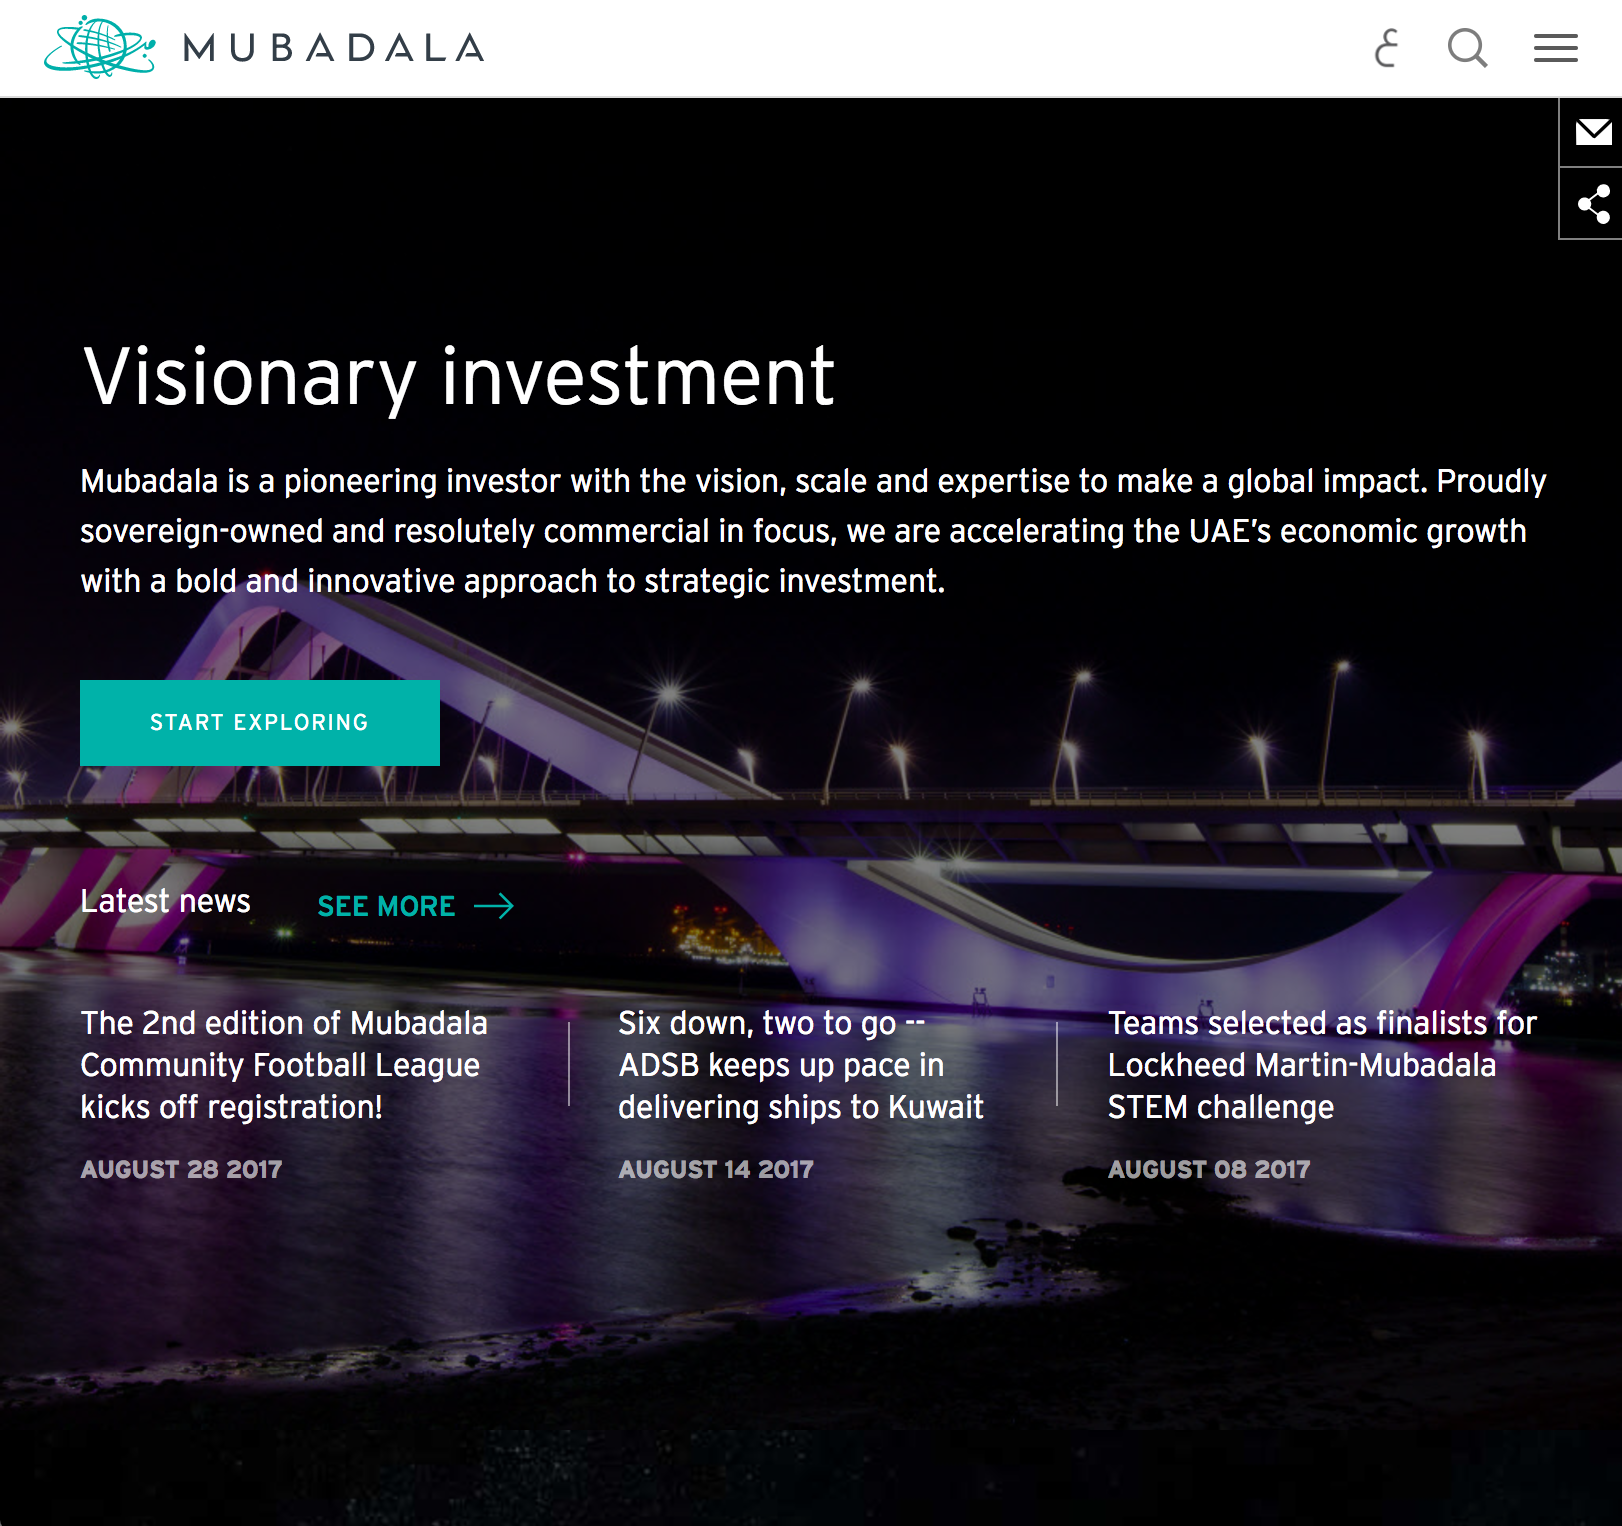 Mubadala Corporate Website image